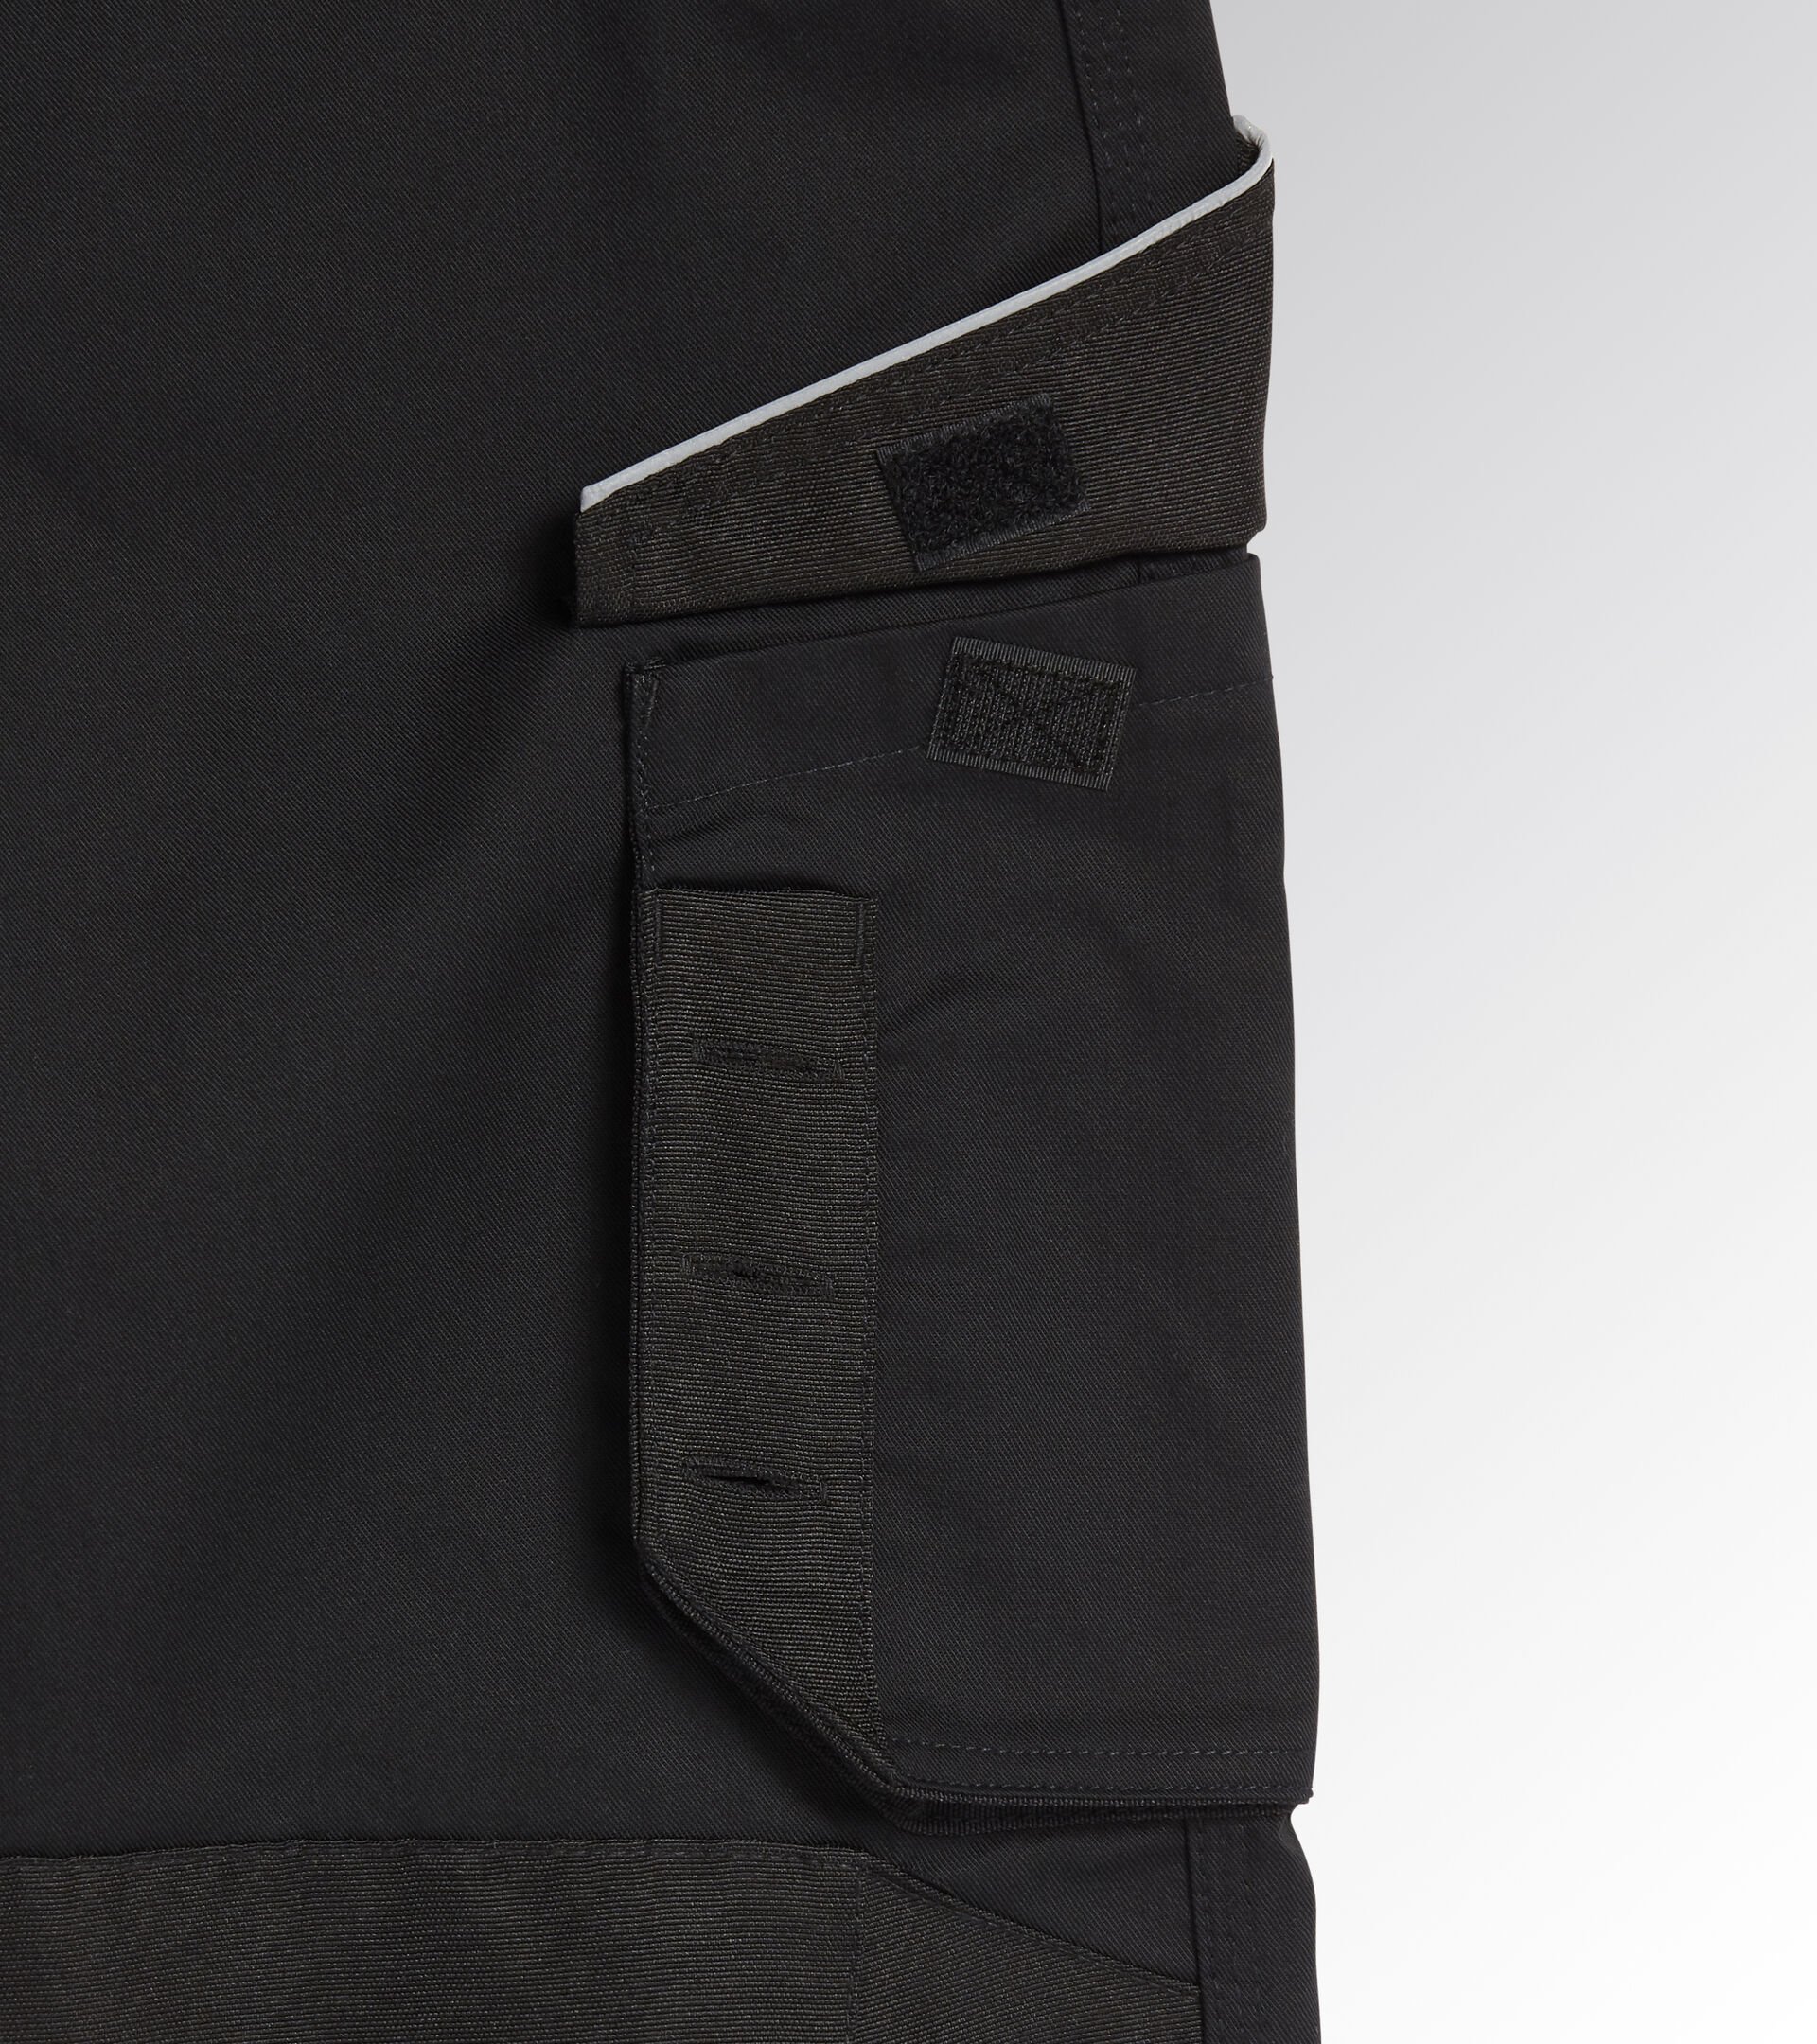 Work trousers PANT ROCK PERFORMANCE BLACK - Utility